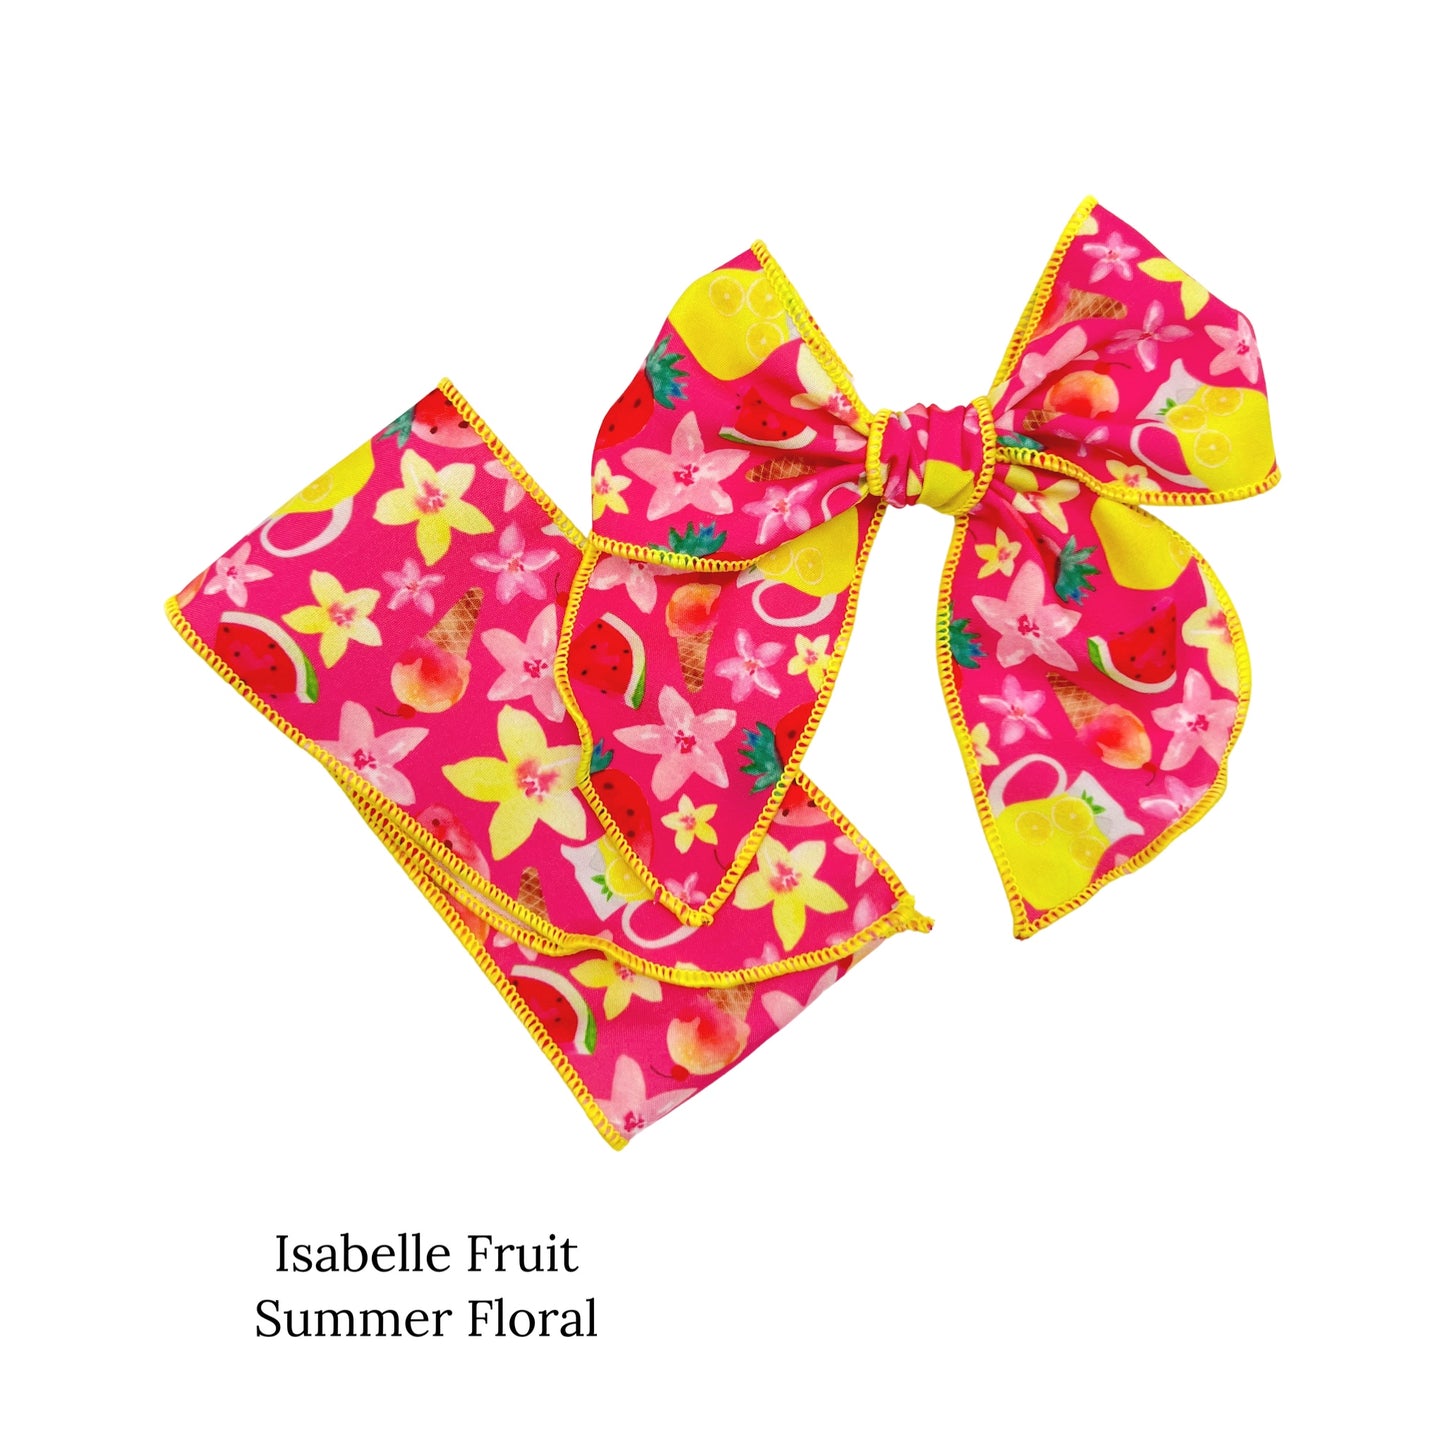 Fruit Summer Floral | Bow Strips